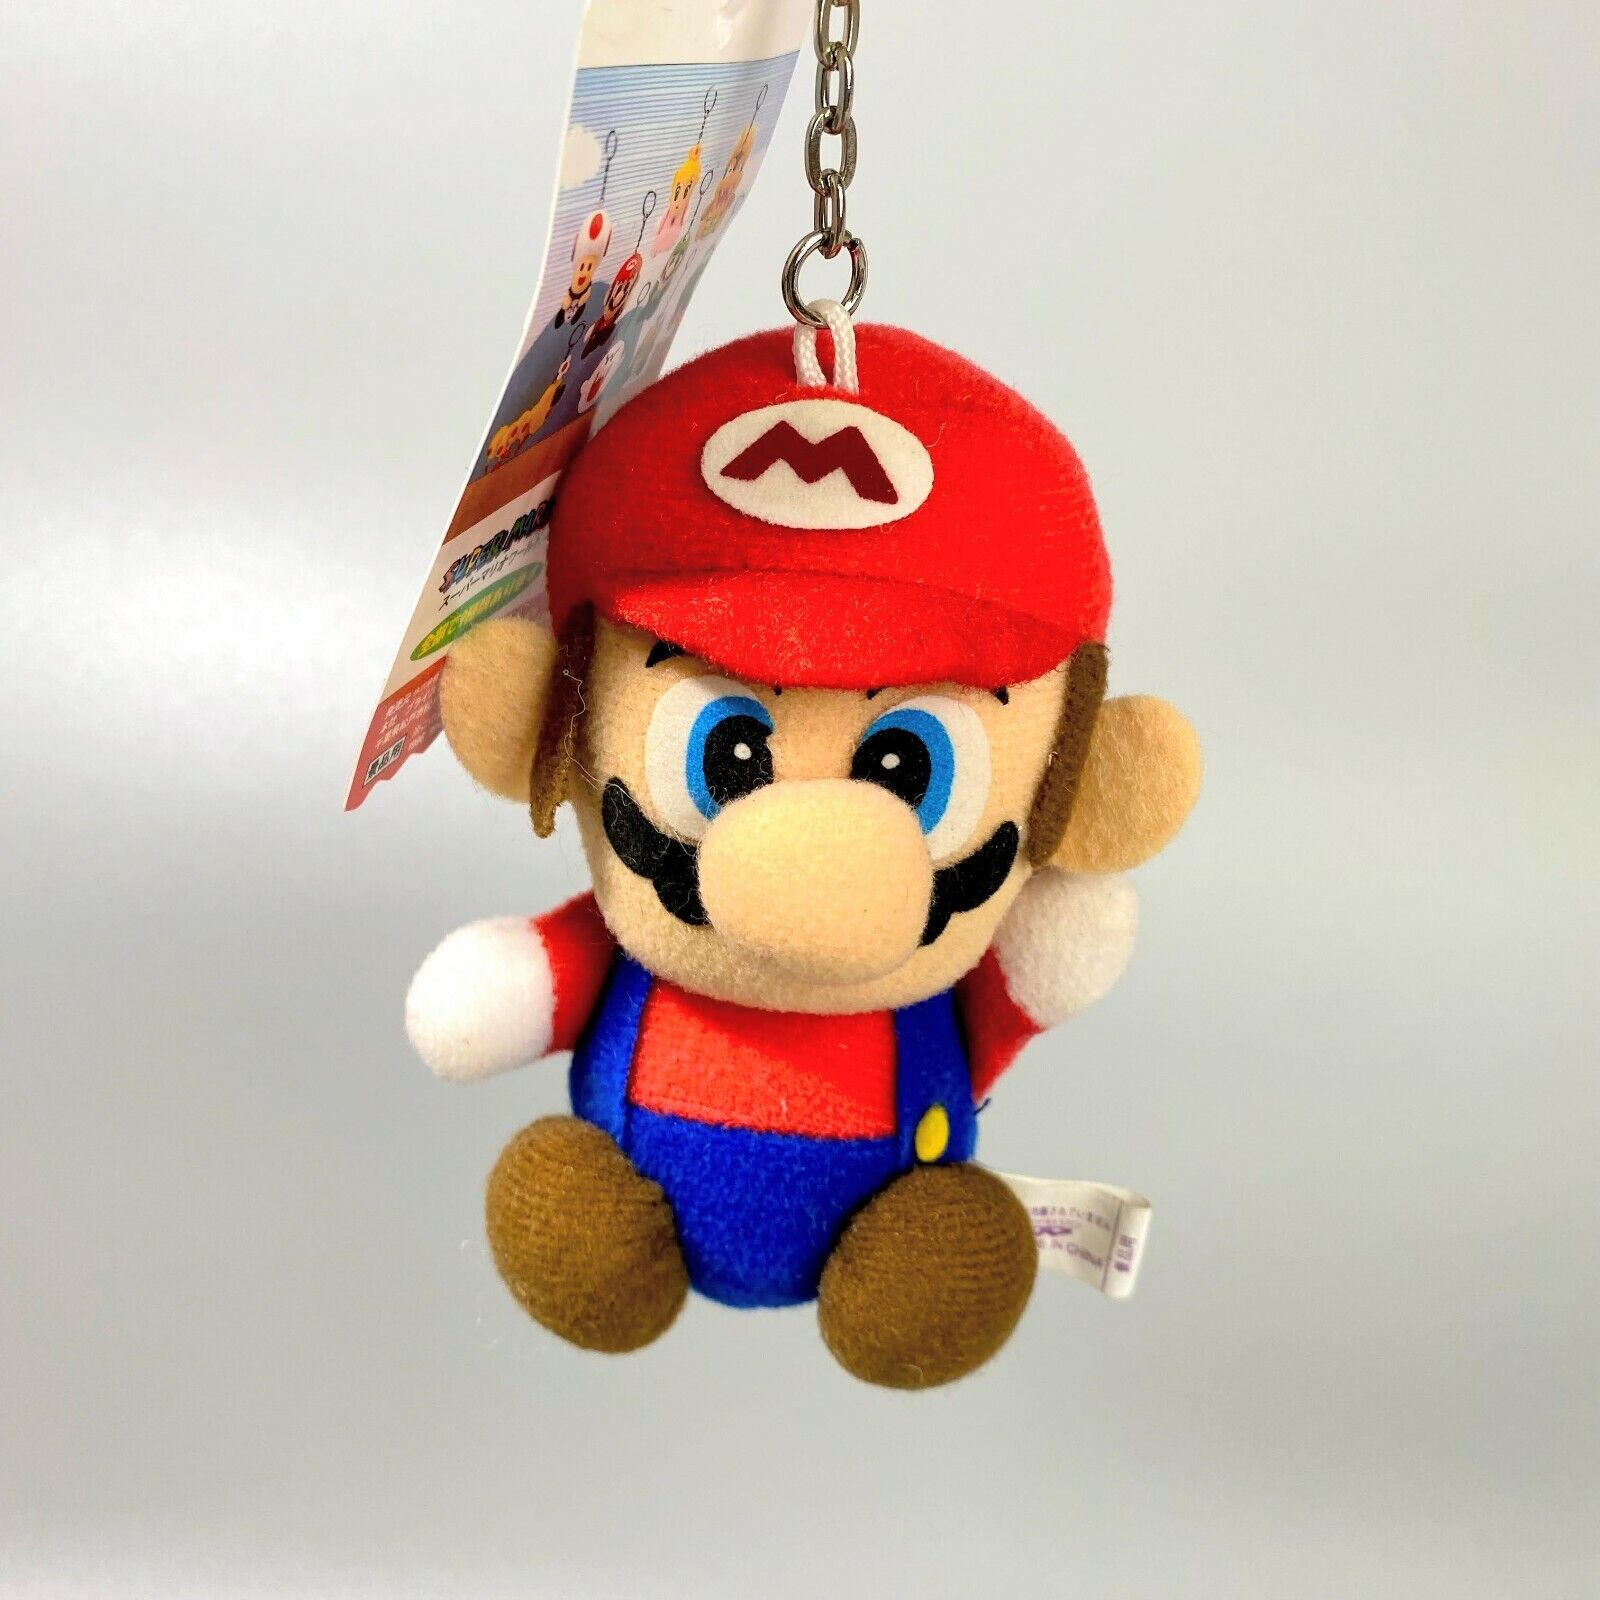 Rare 1996 Super Mario world key chain Banpresto Nintendo Plush doll retro japan